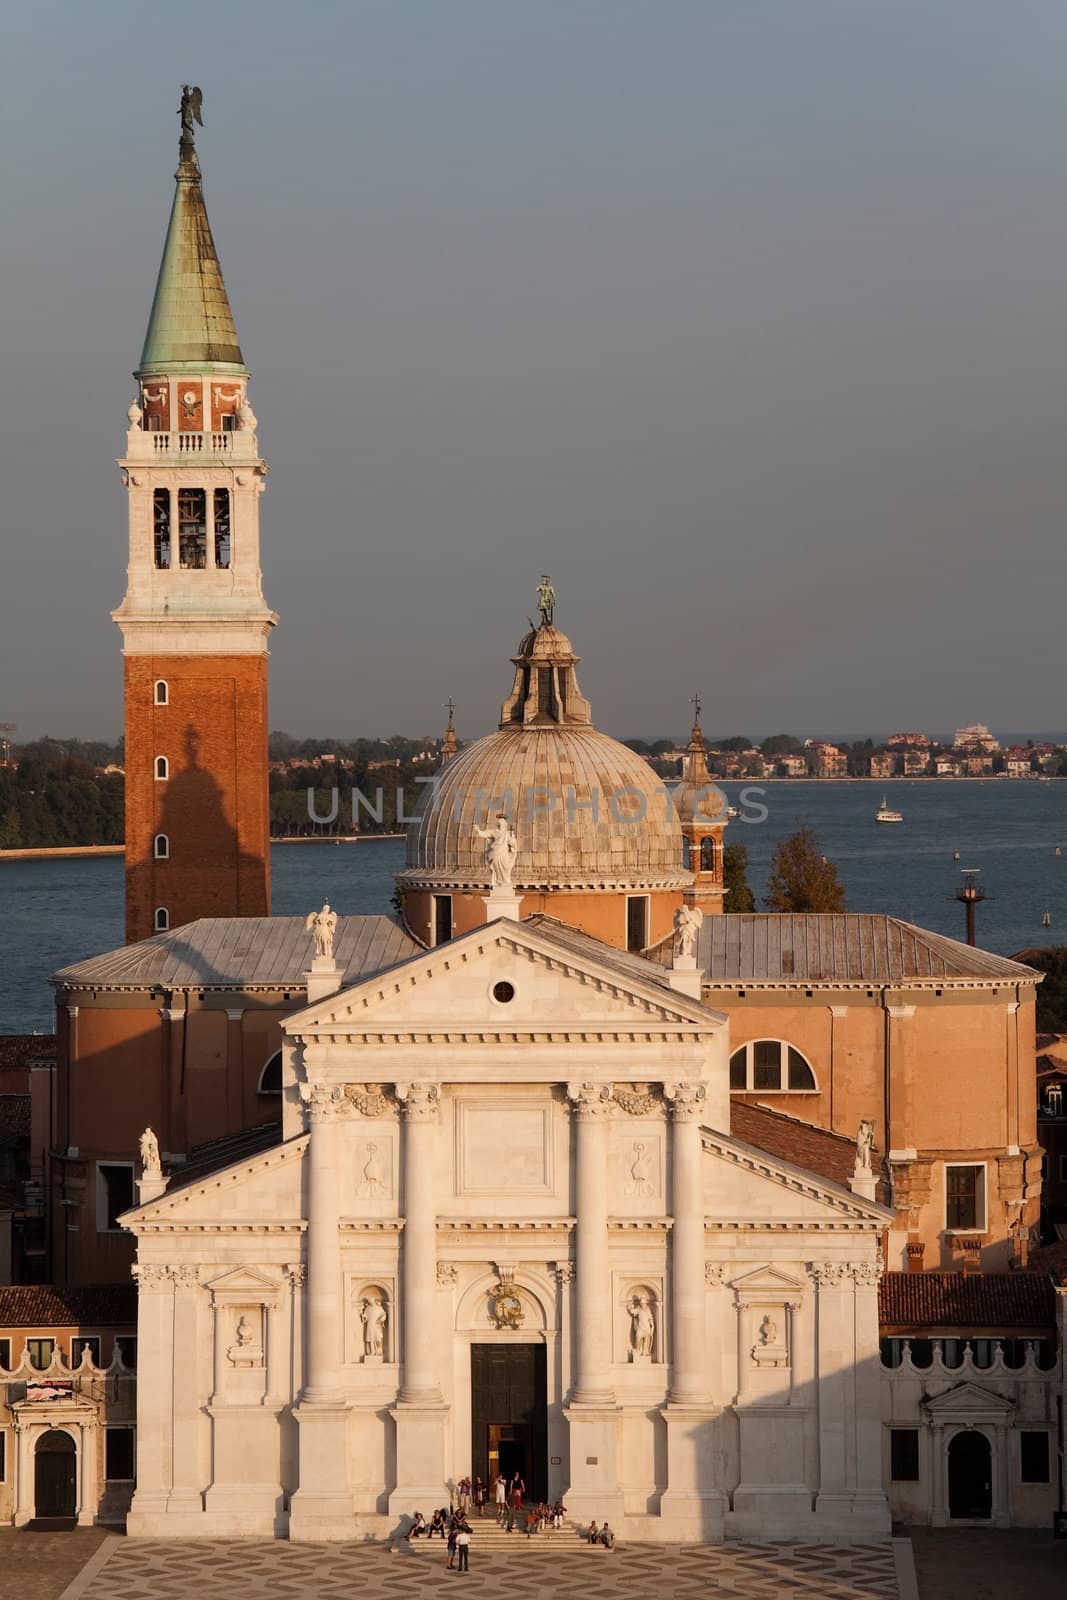 The Basilica of San Giorgio Maggiore which is on its own island in Venice, Italy